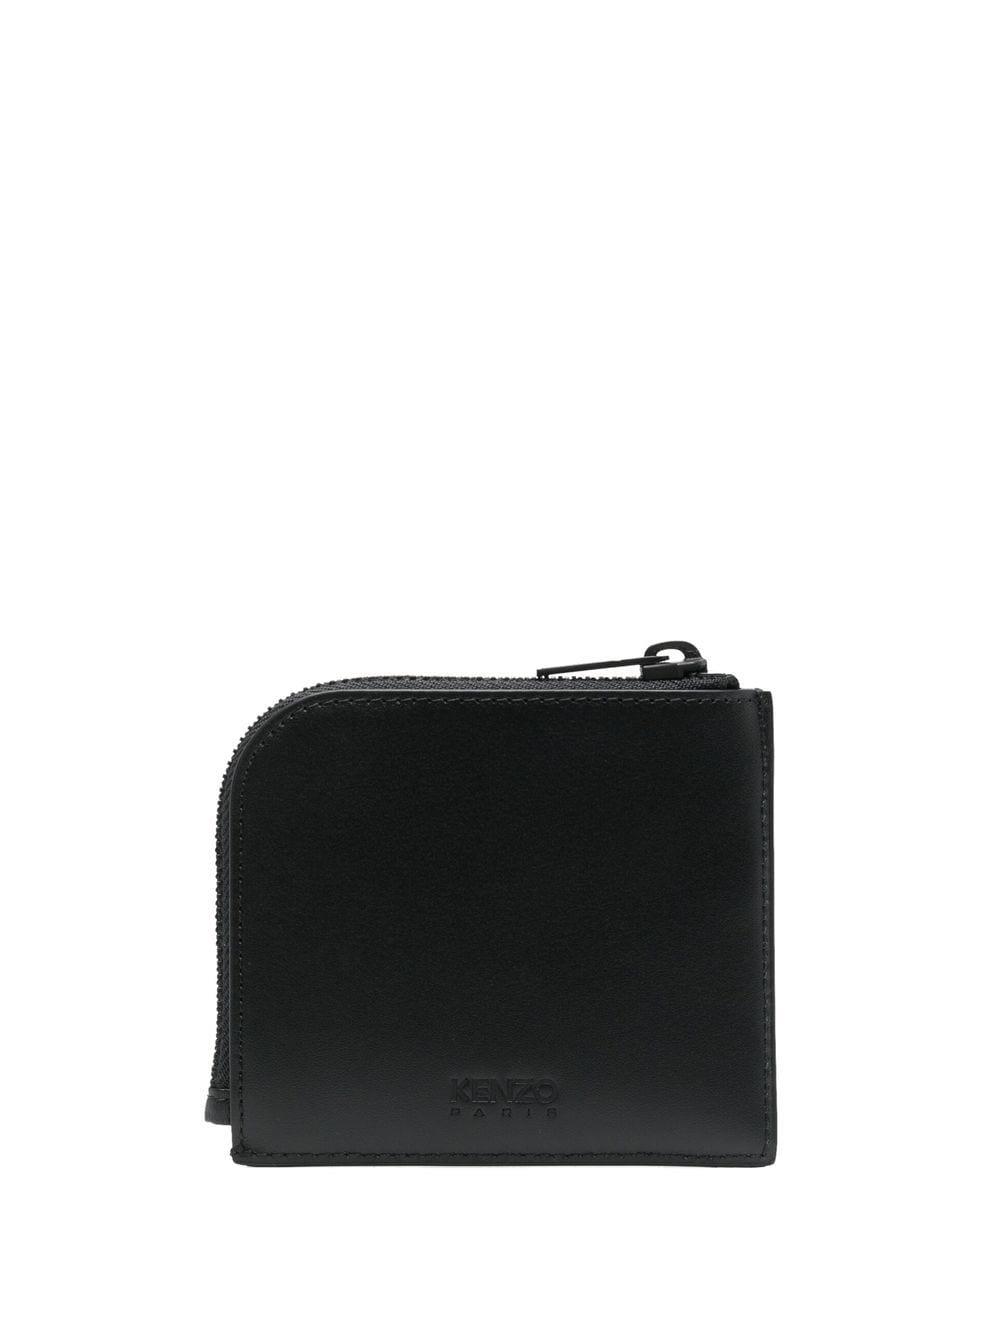 Kenzo logo-print leather wallet - Black